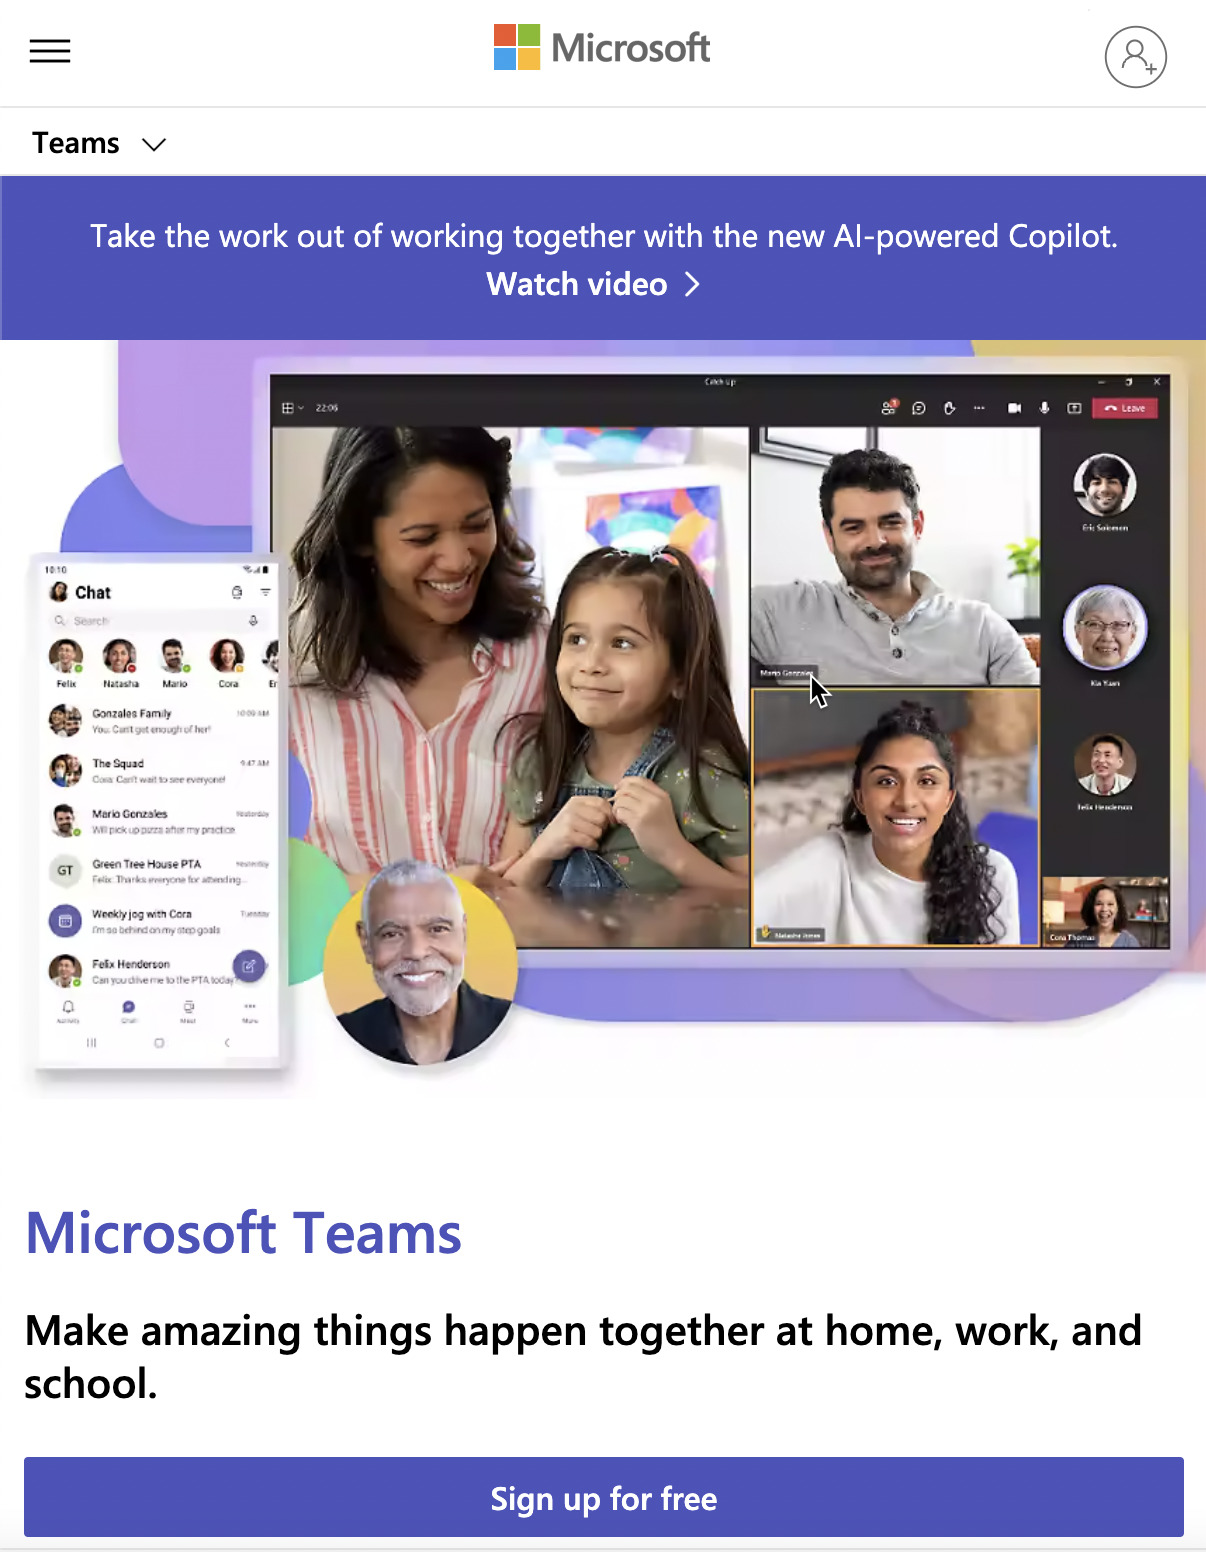 Microsoft Teams landing page, via microsoft.com